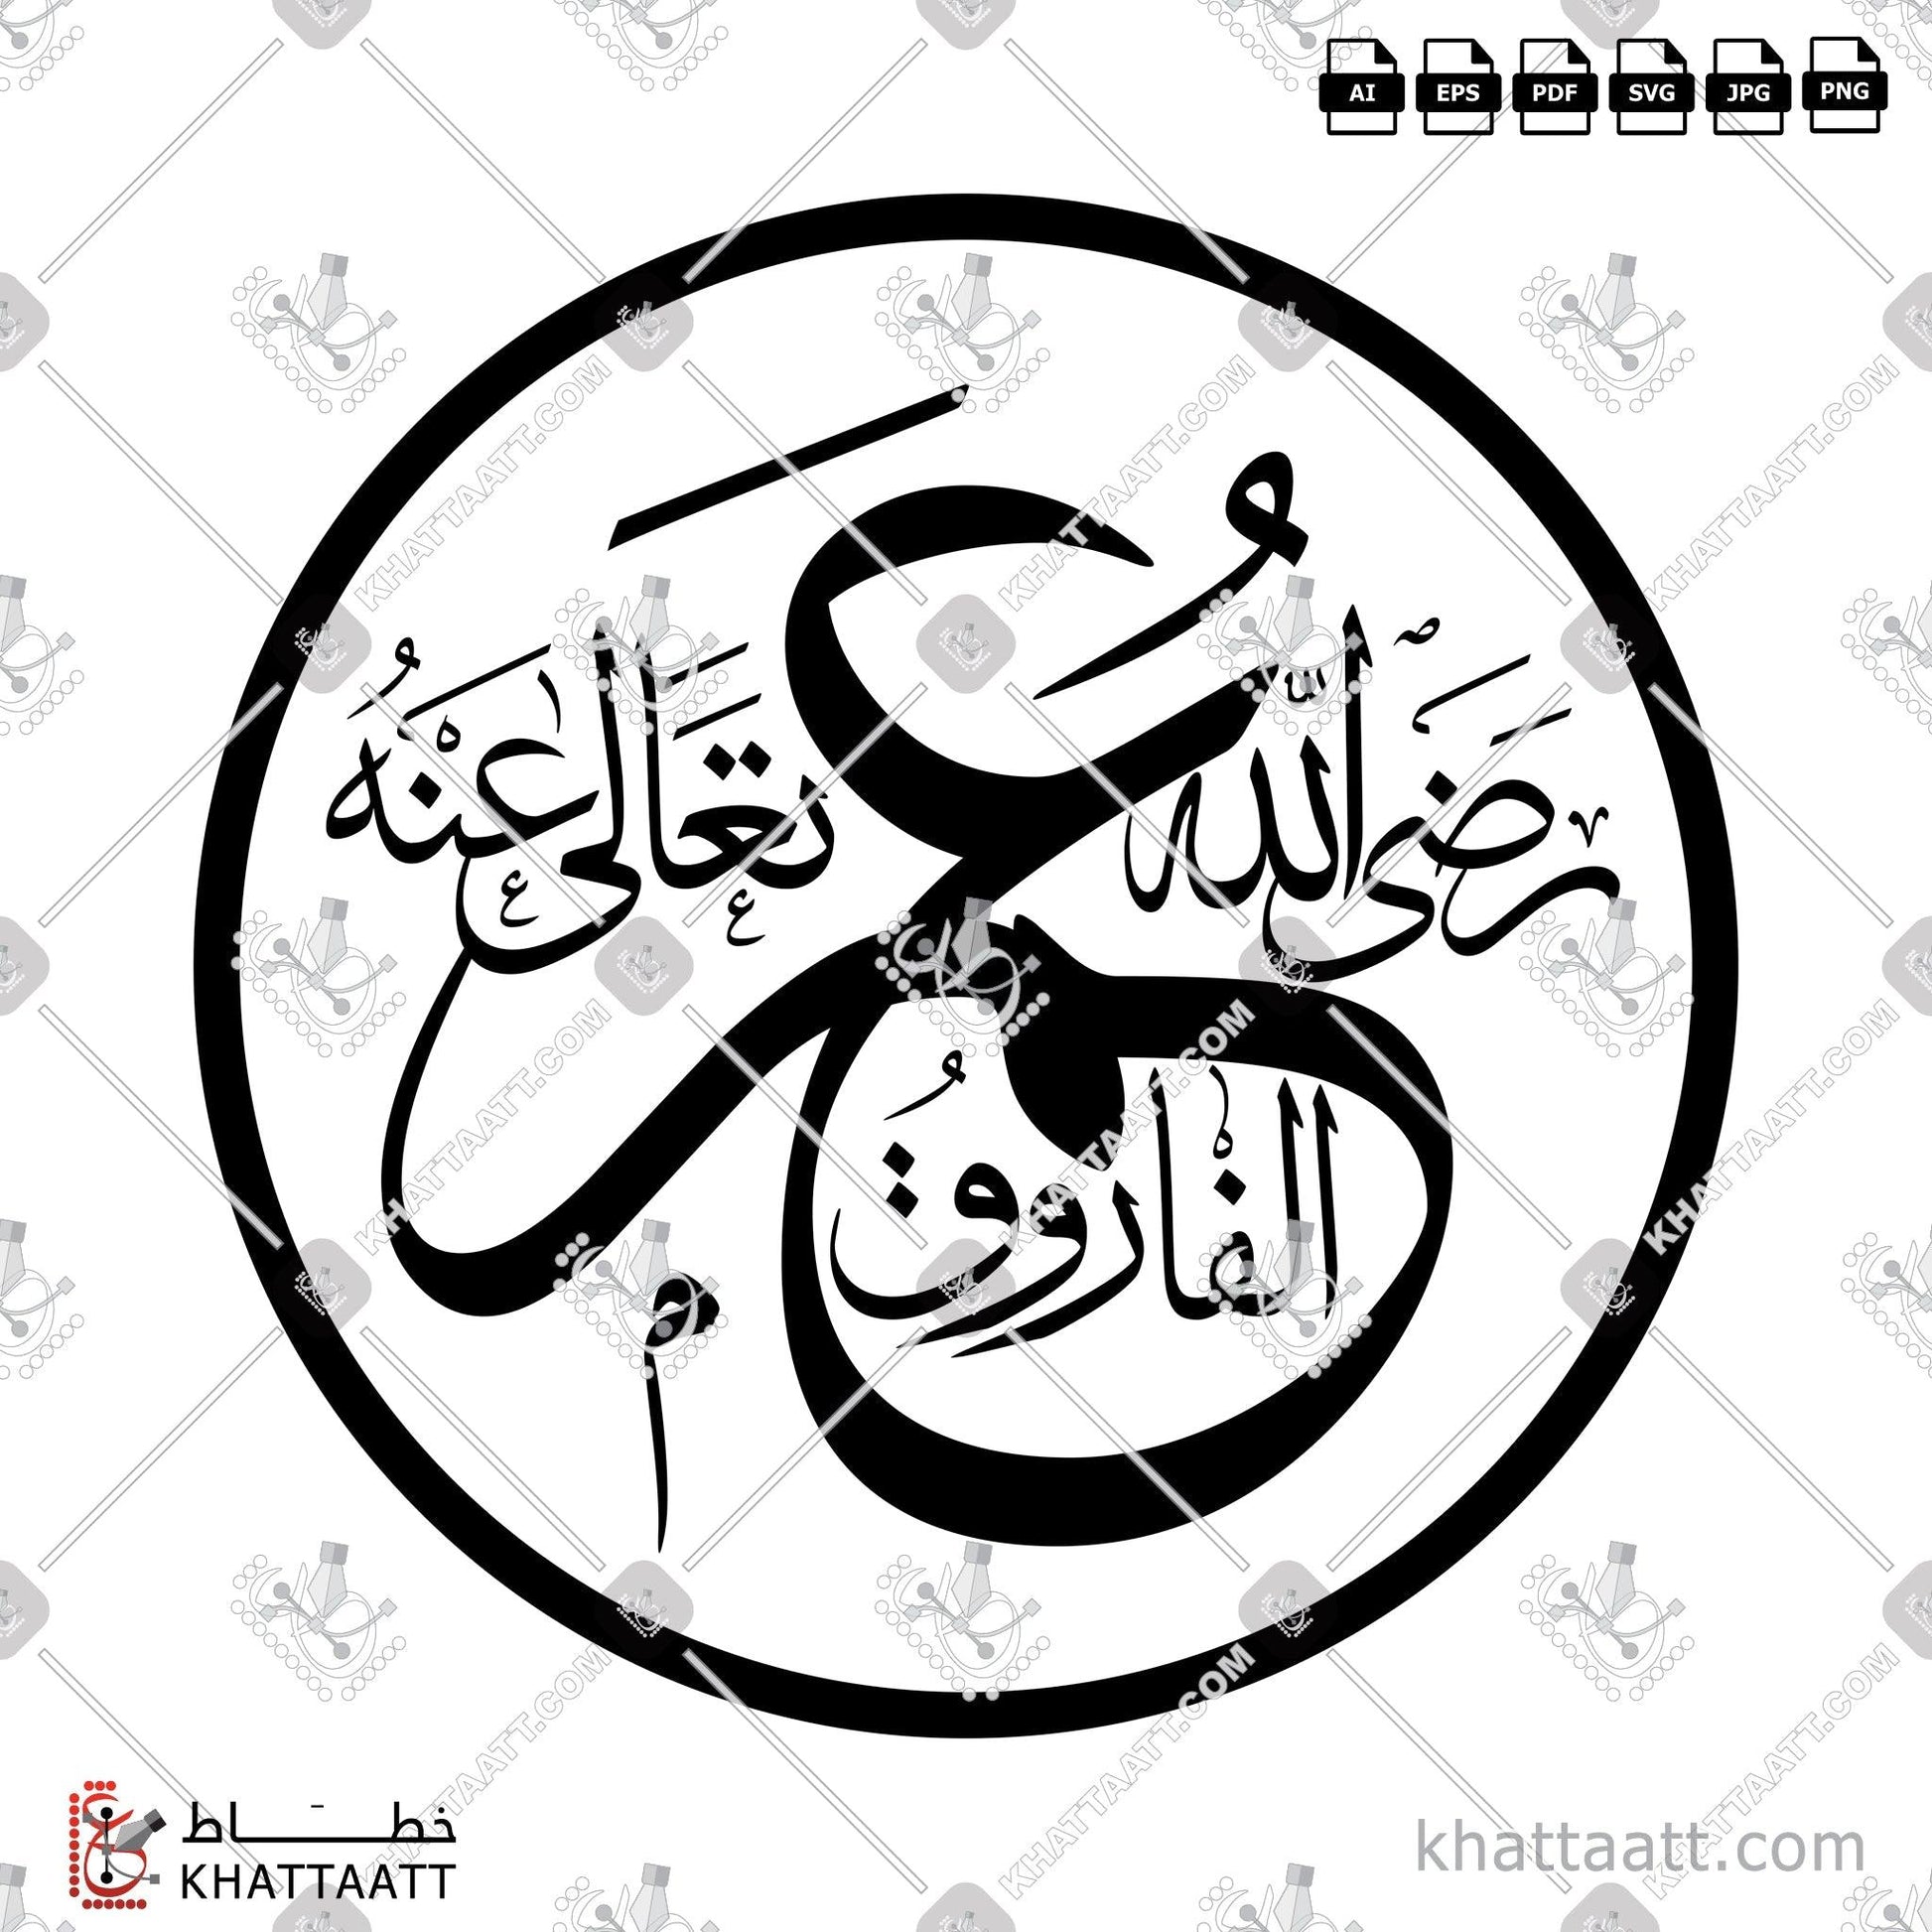 Download Arabic Calligraphy of Umar ibn Al-Khattab - عمر بن الخطاب in Thuluth - خط الثلث in vector and .png